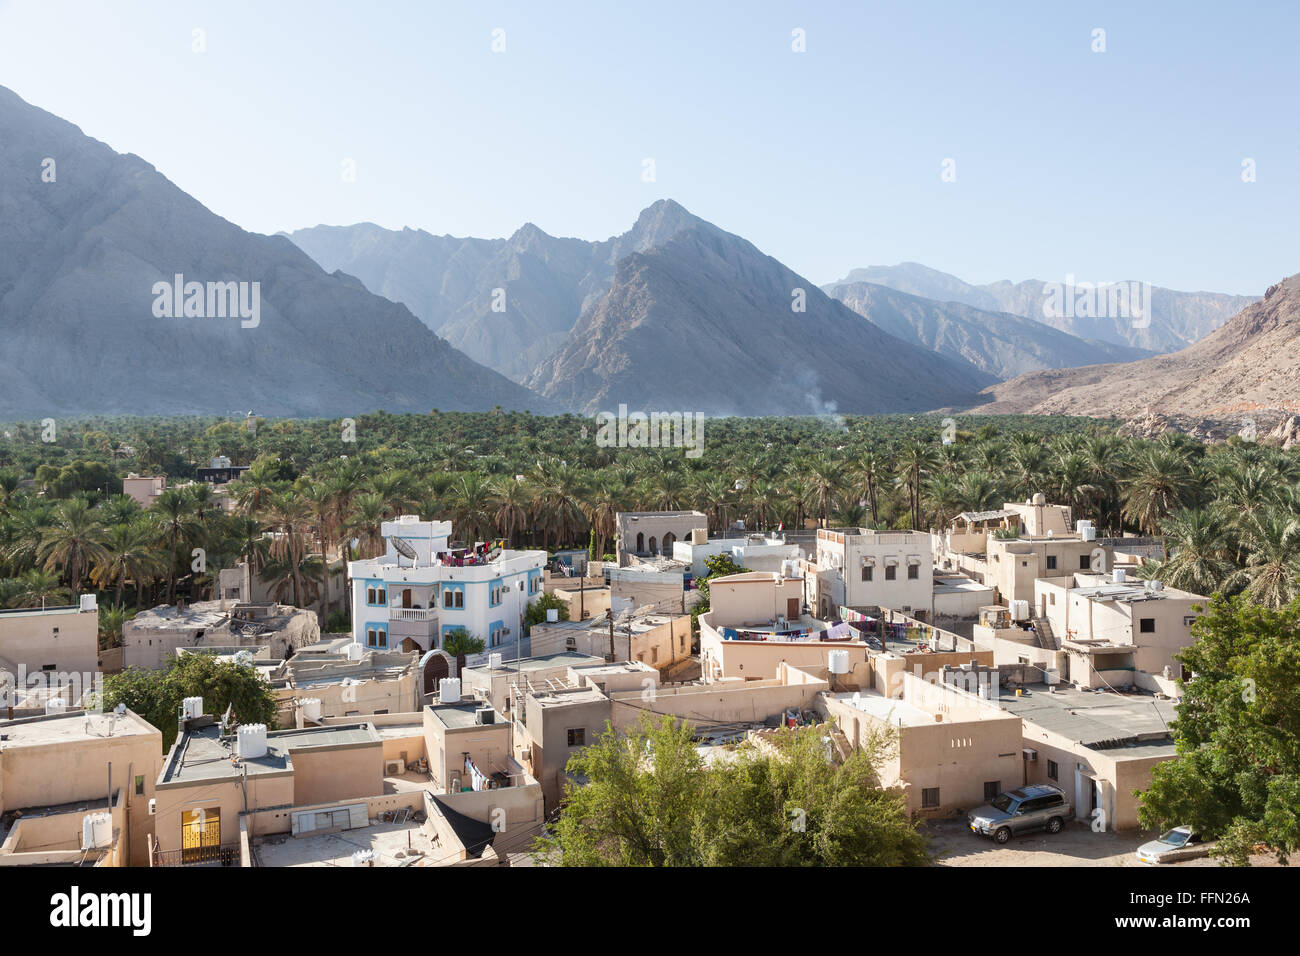 View over town Nakhl, Oman Stock Photo